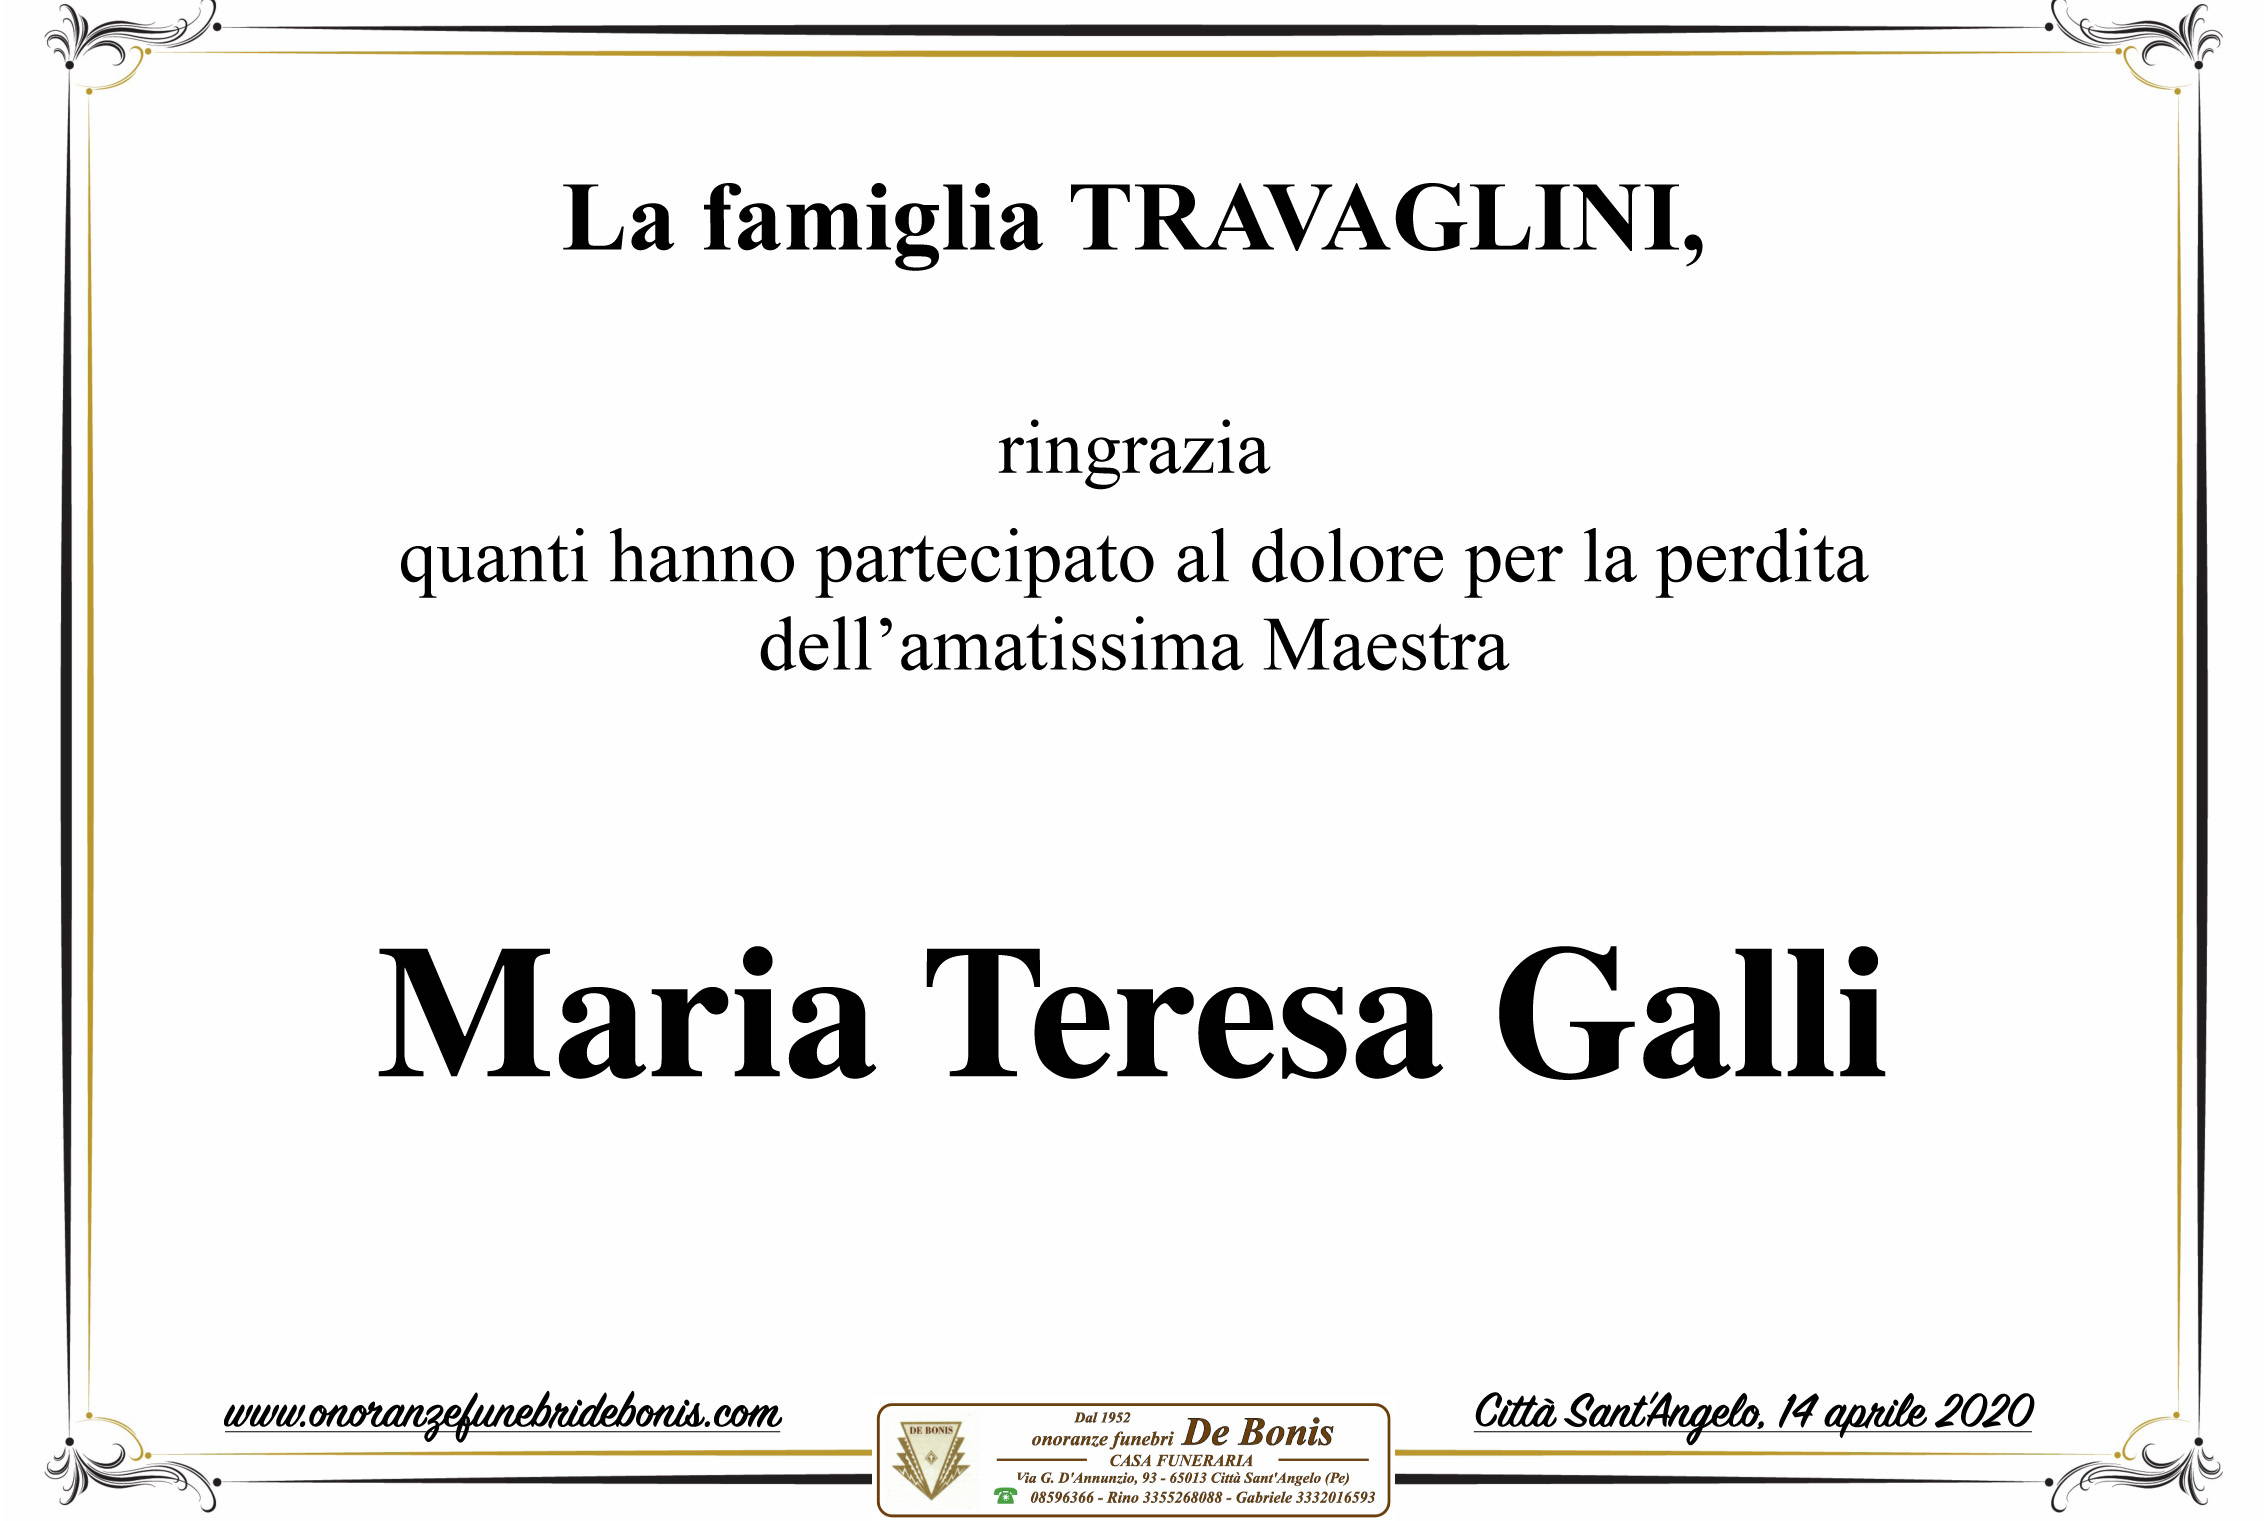 Maria Teresa Galli